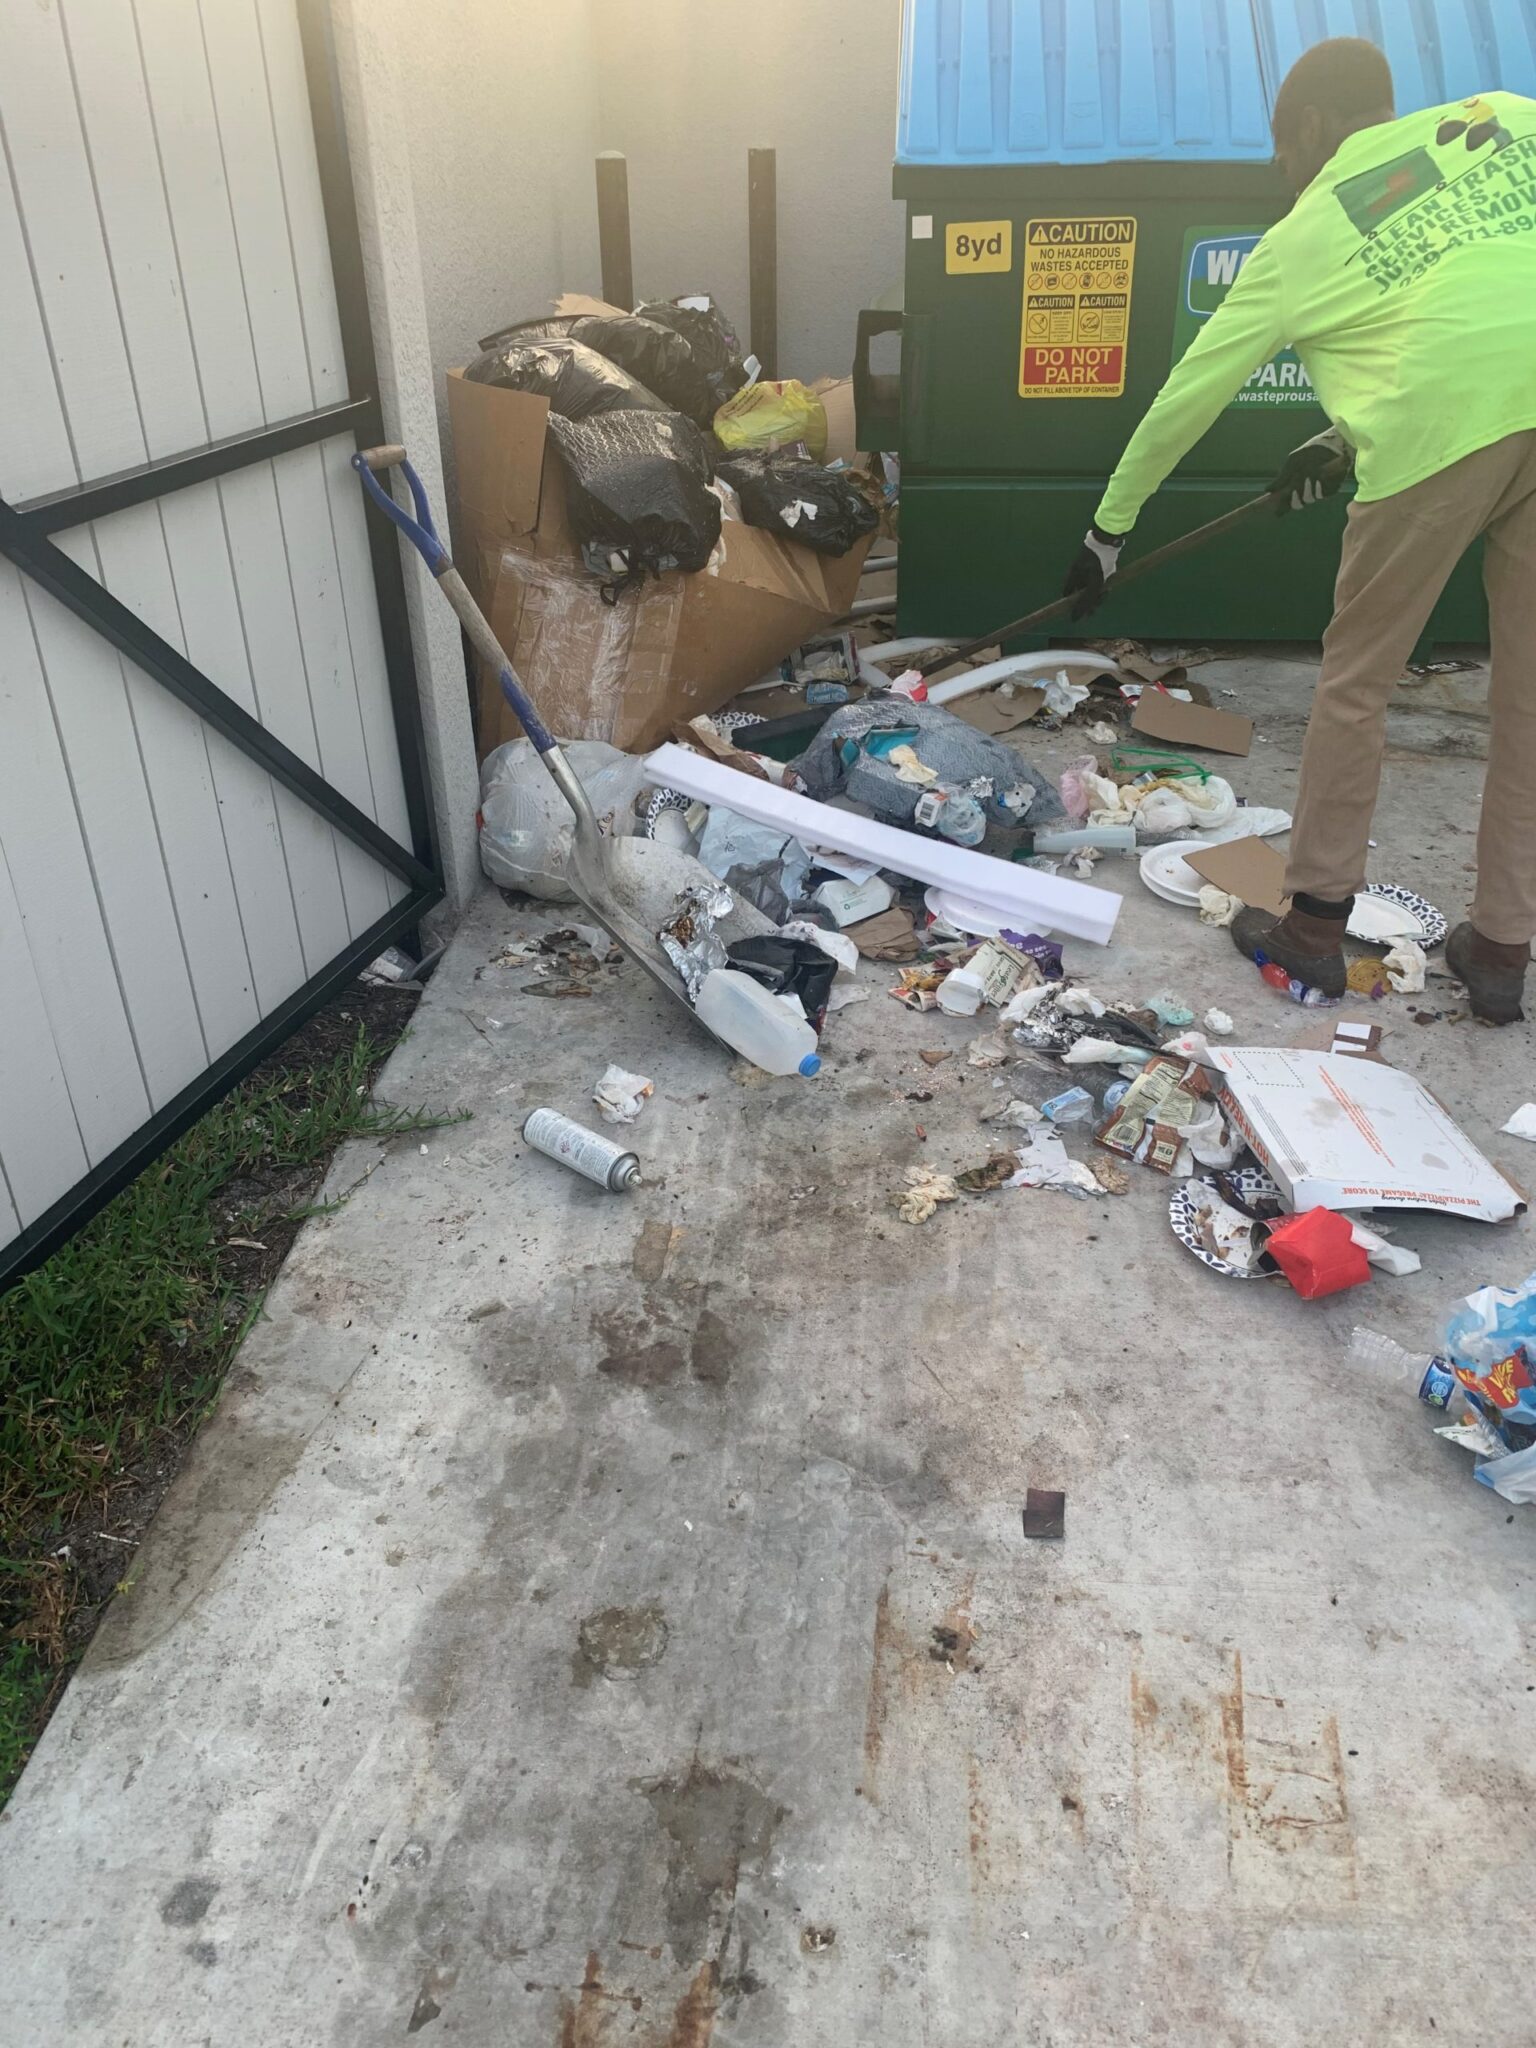 Employee raking up trash to throw in into dumpster.